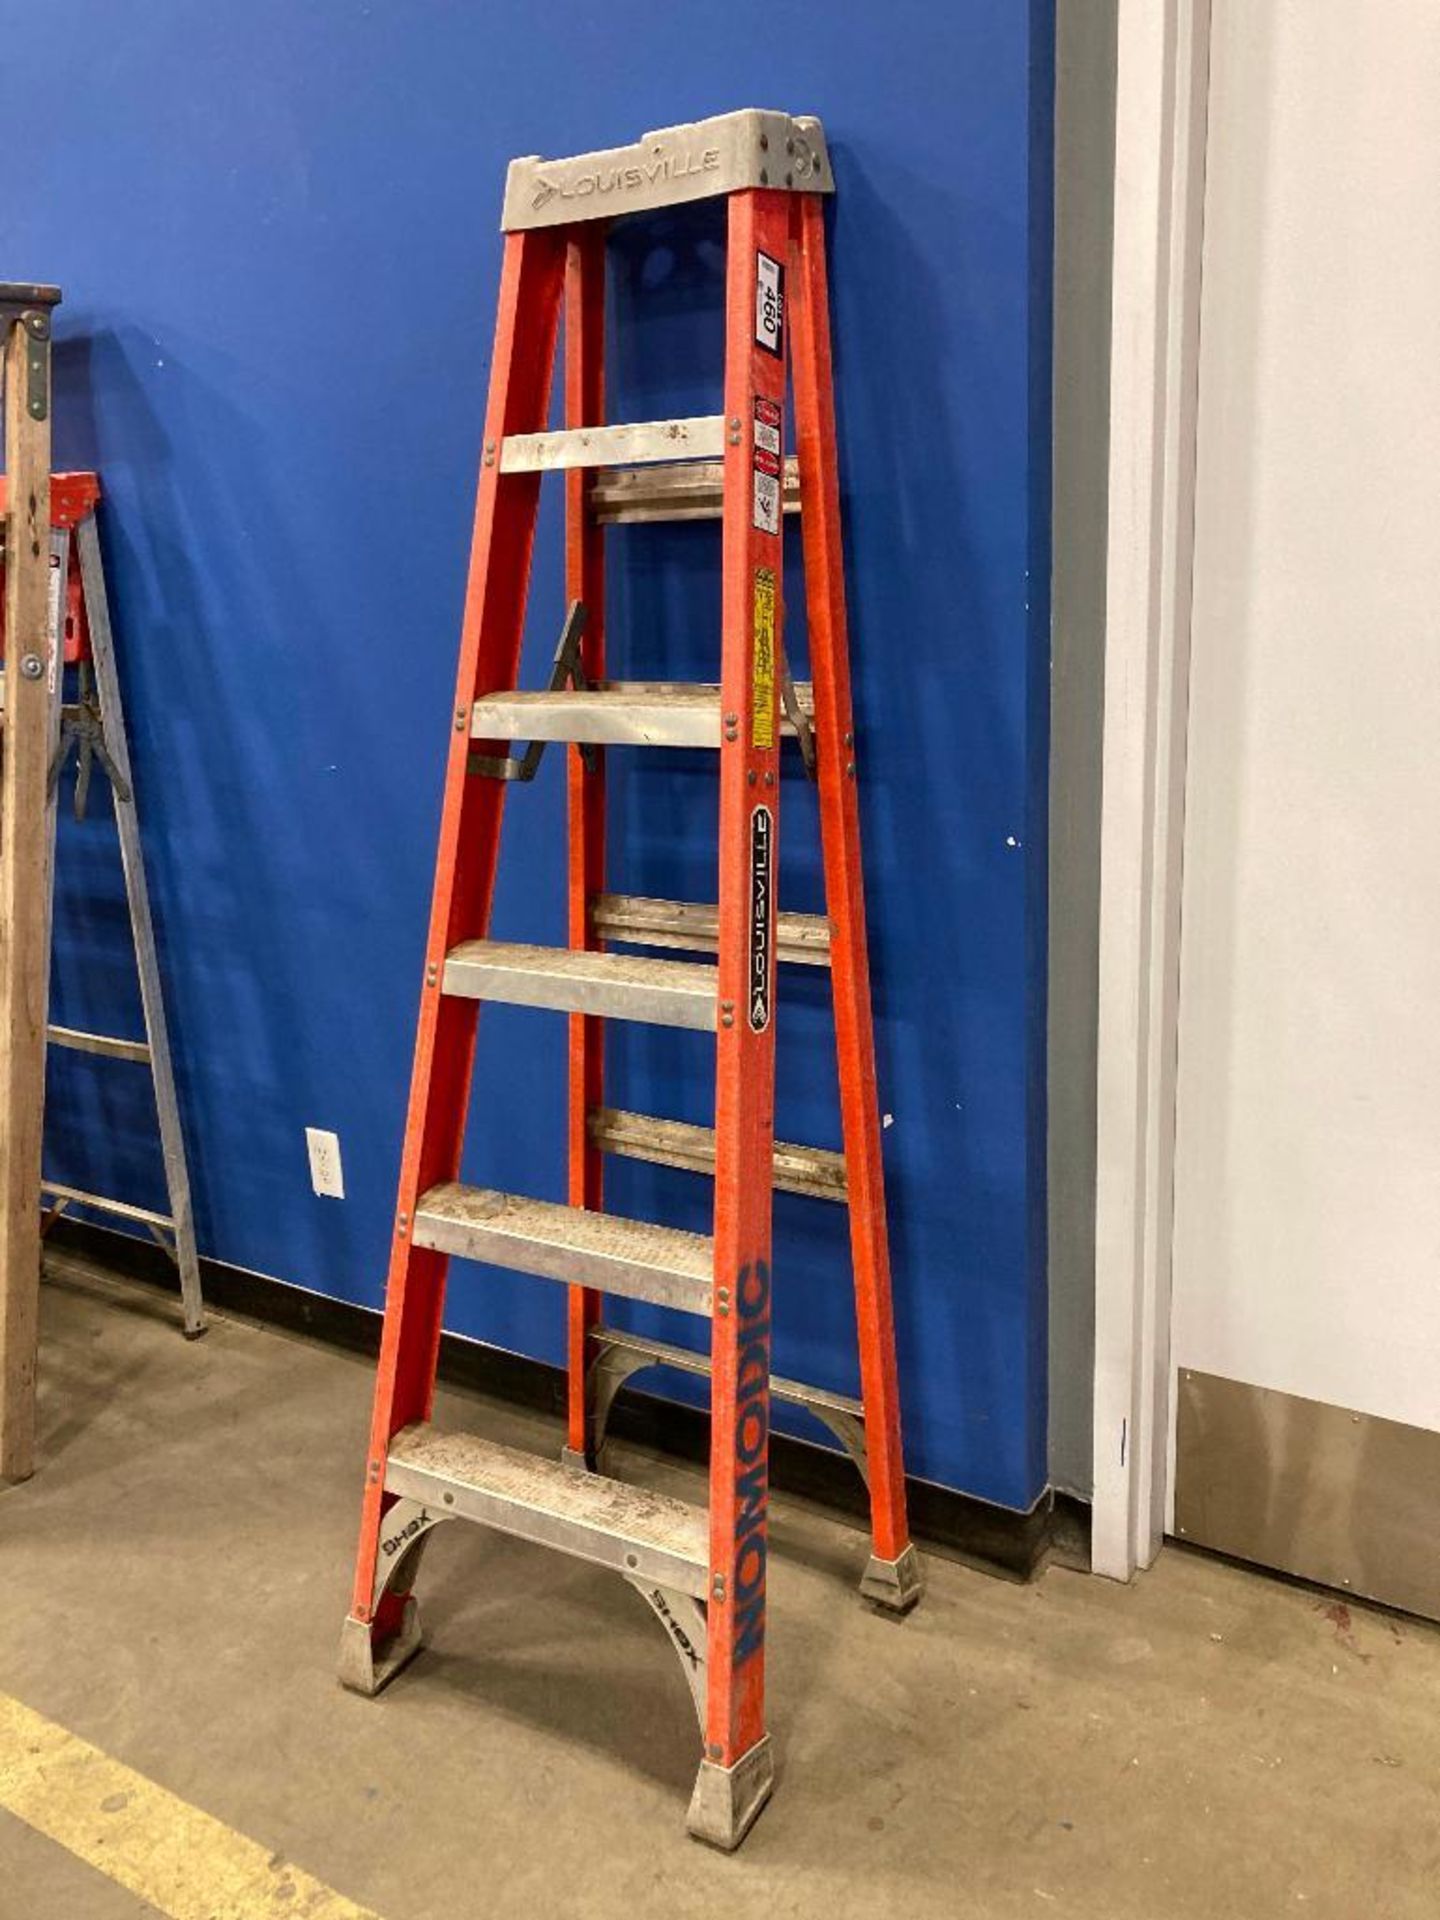 Louisville 6' Fiberglass Step Ladder - Image 4 of 6